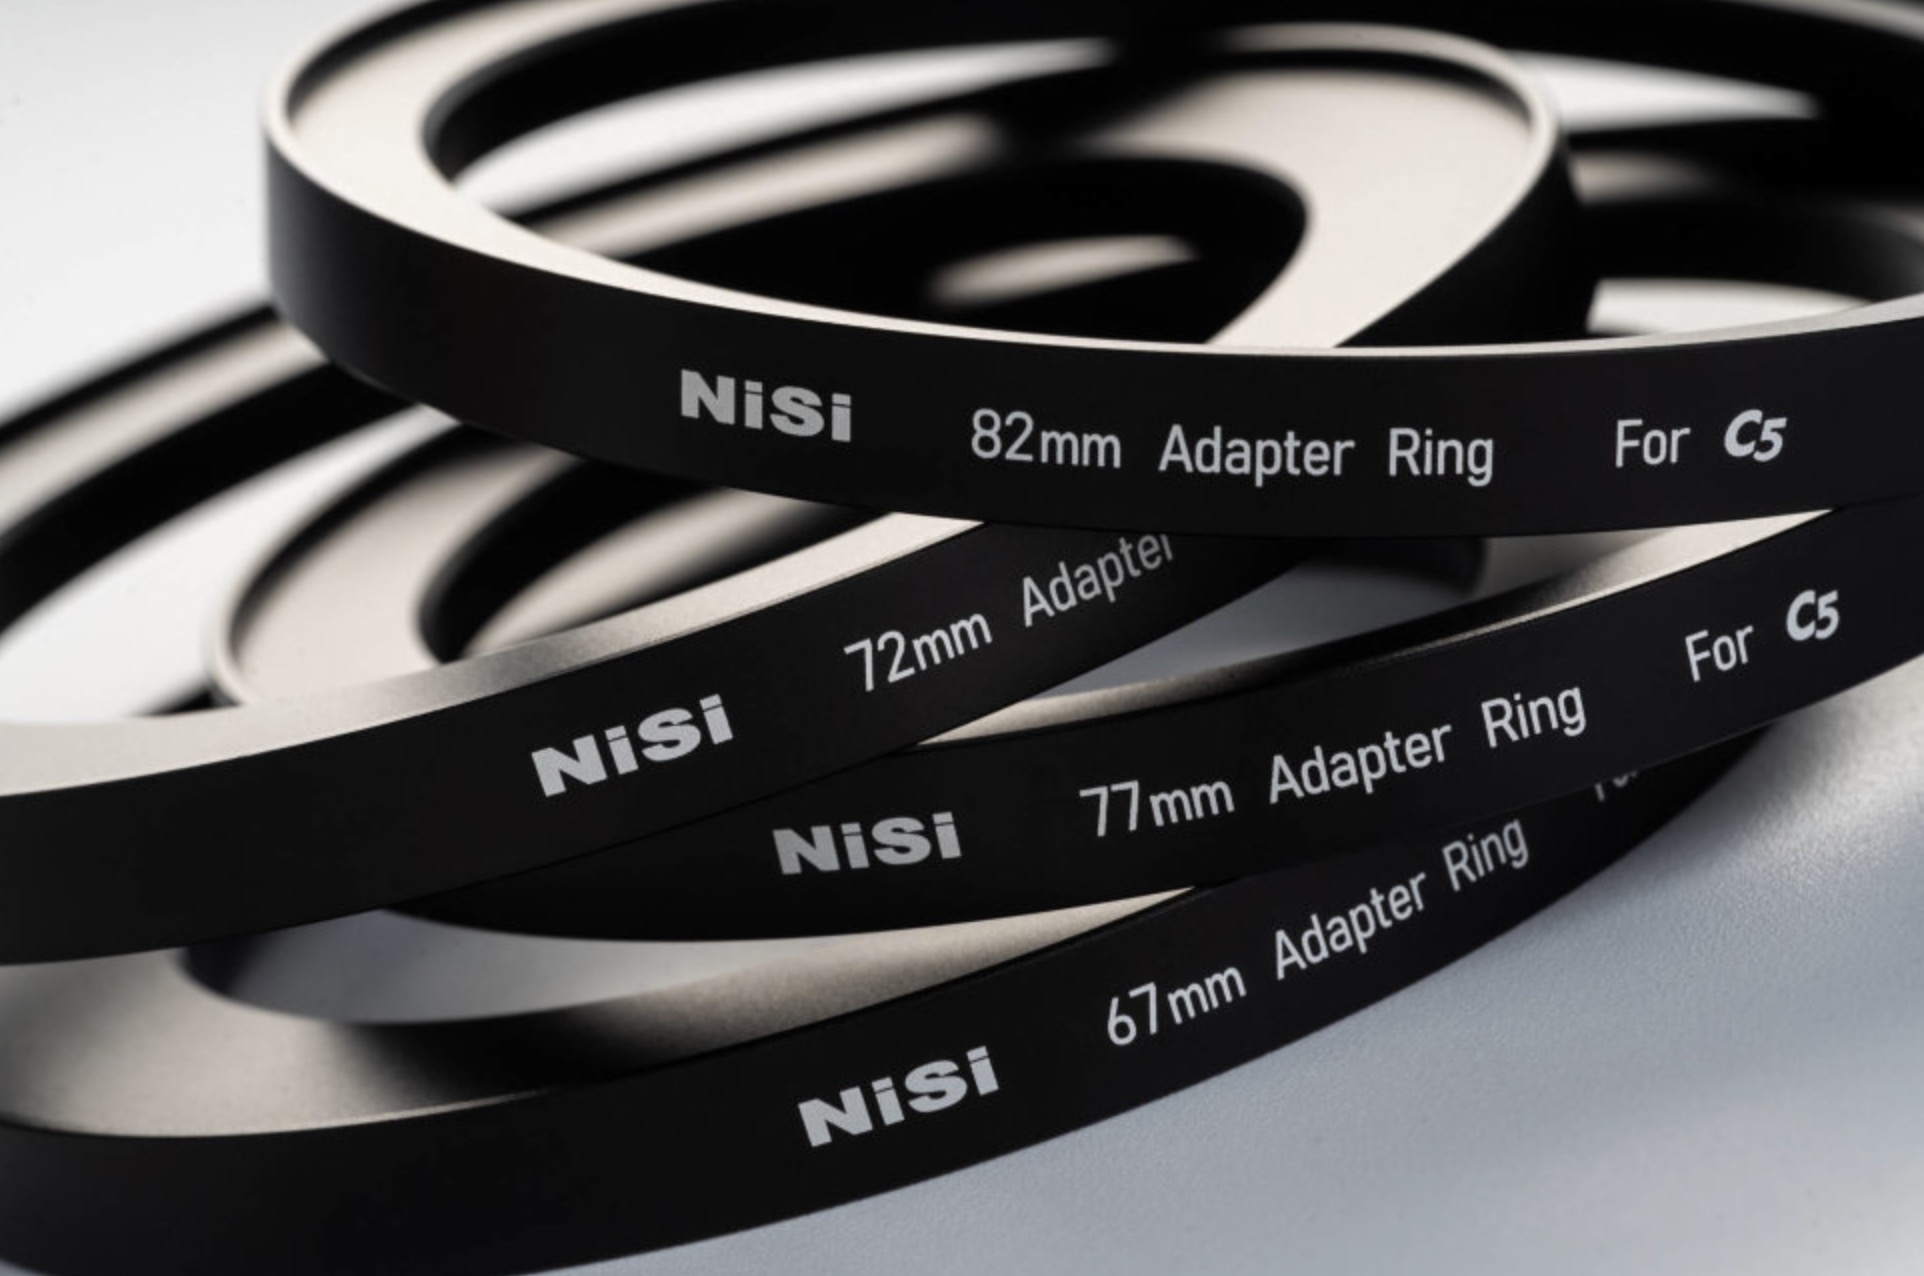 Компендиум NiSi C5 Starter Kit